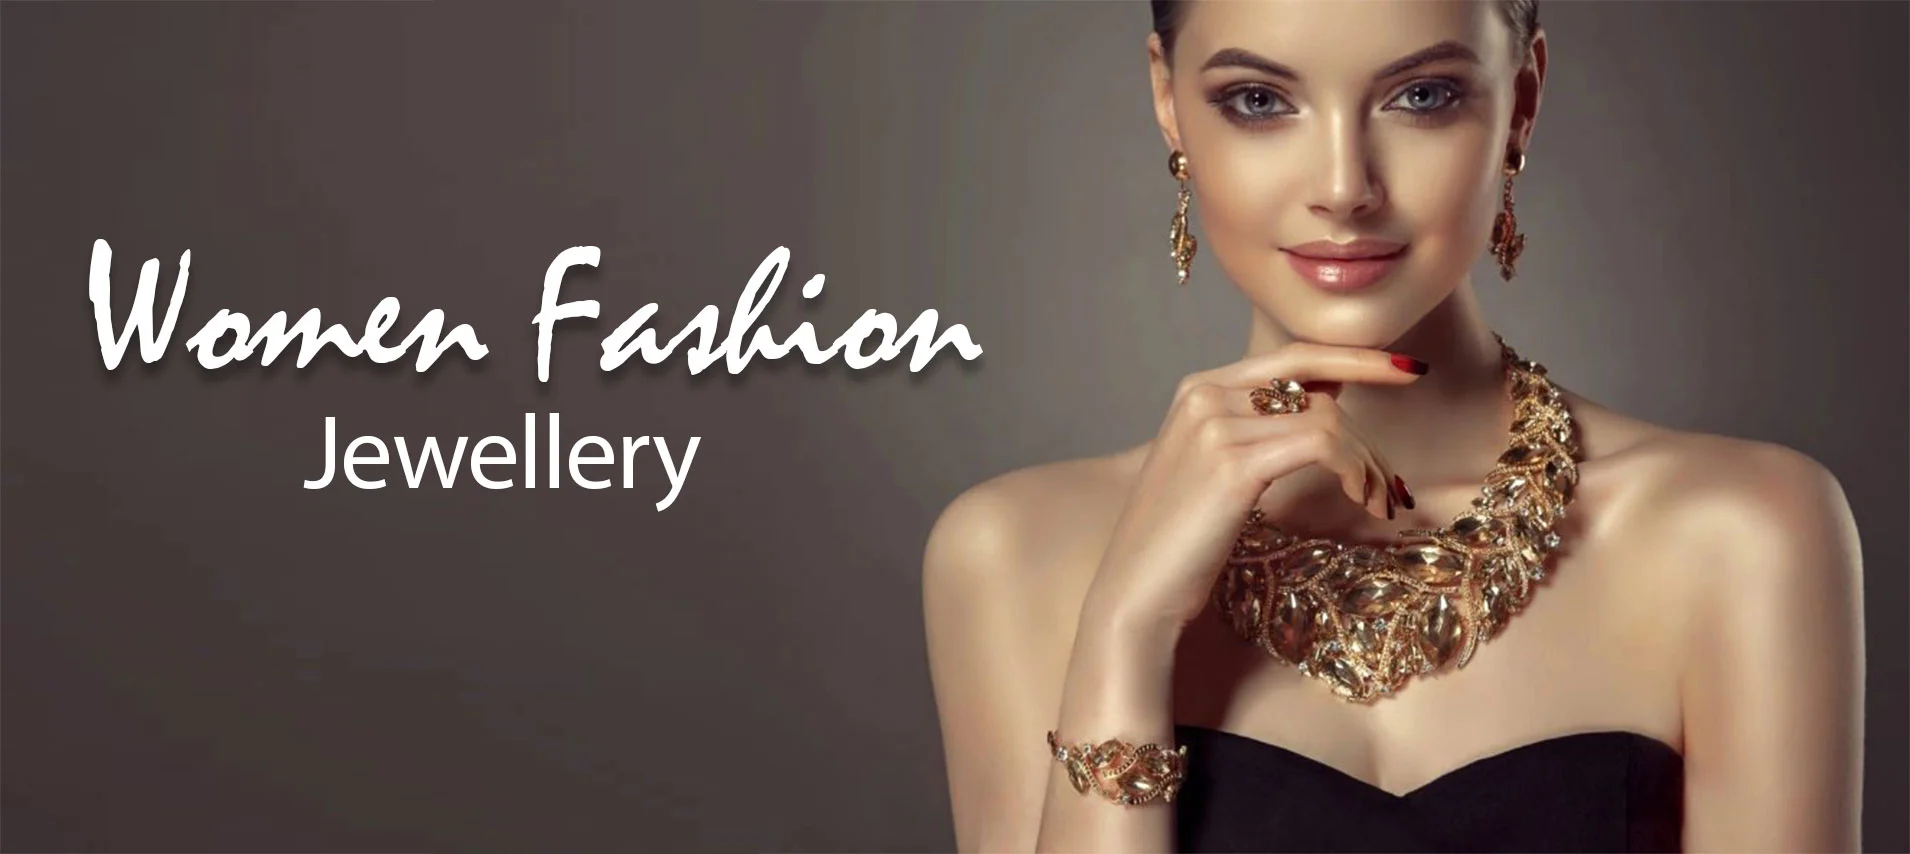 Women’s Fashion Jewelry